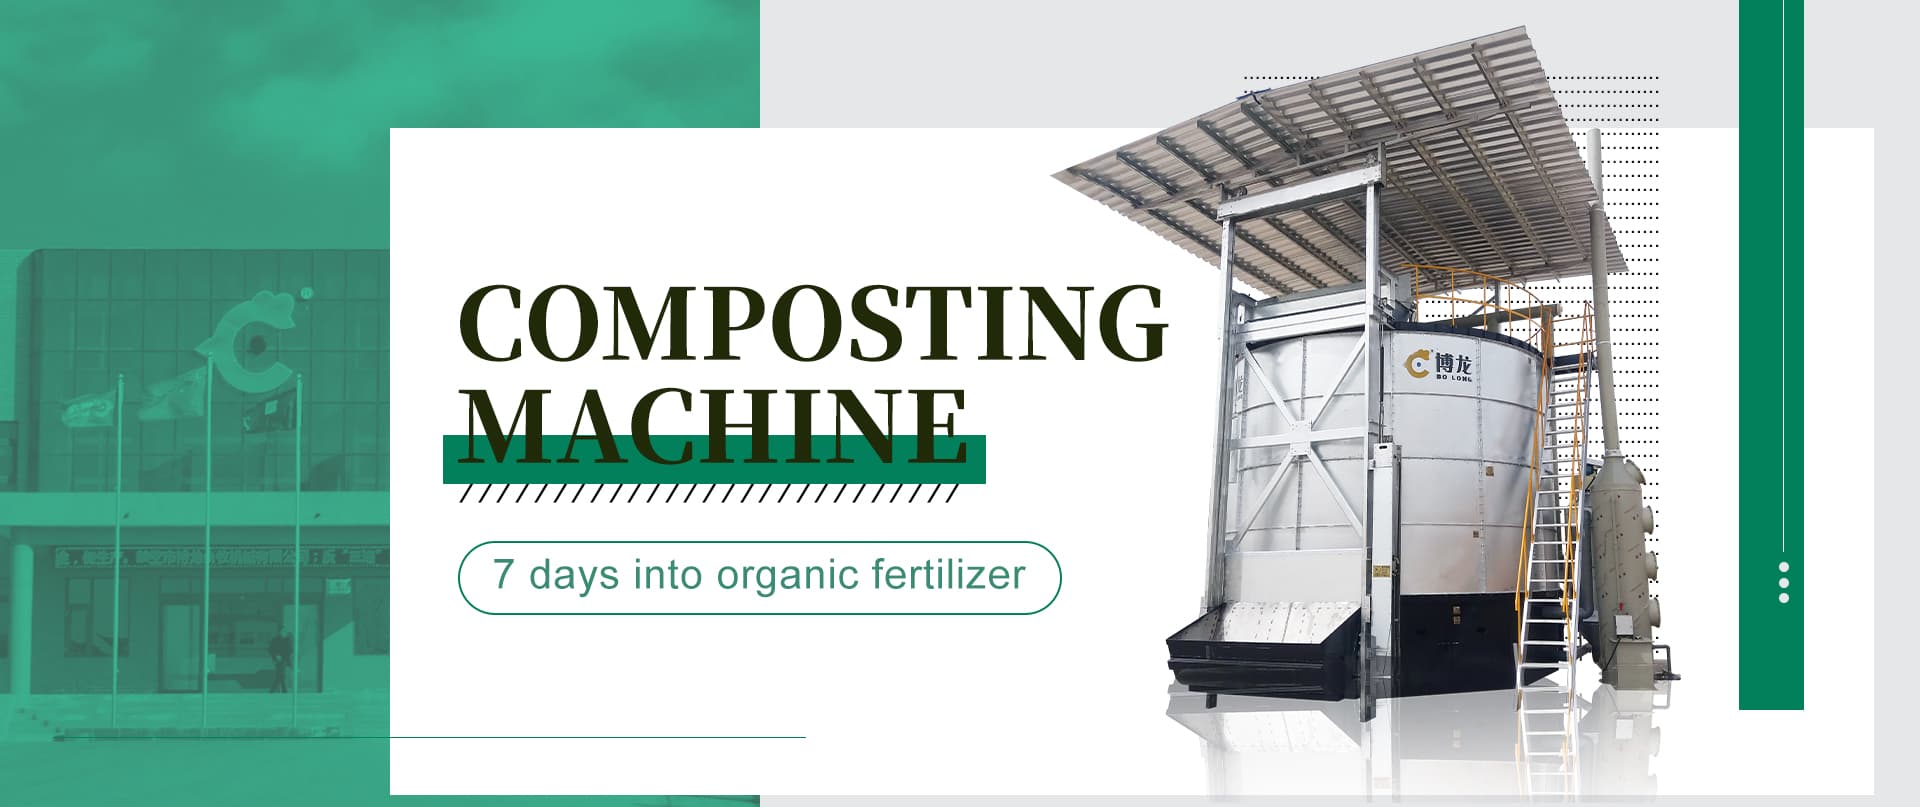 Industrial composting machines